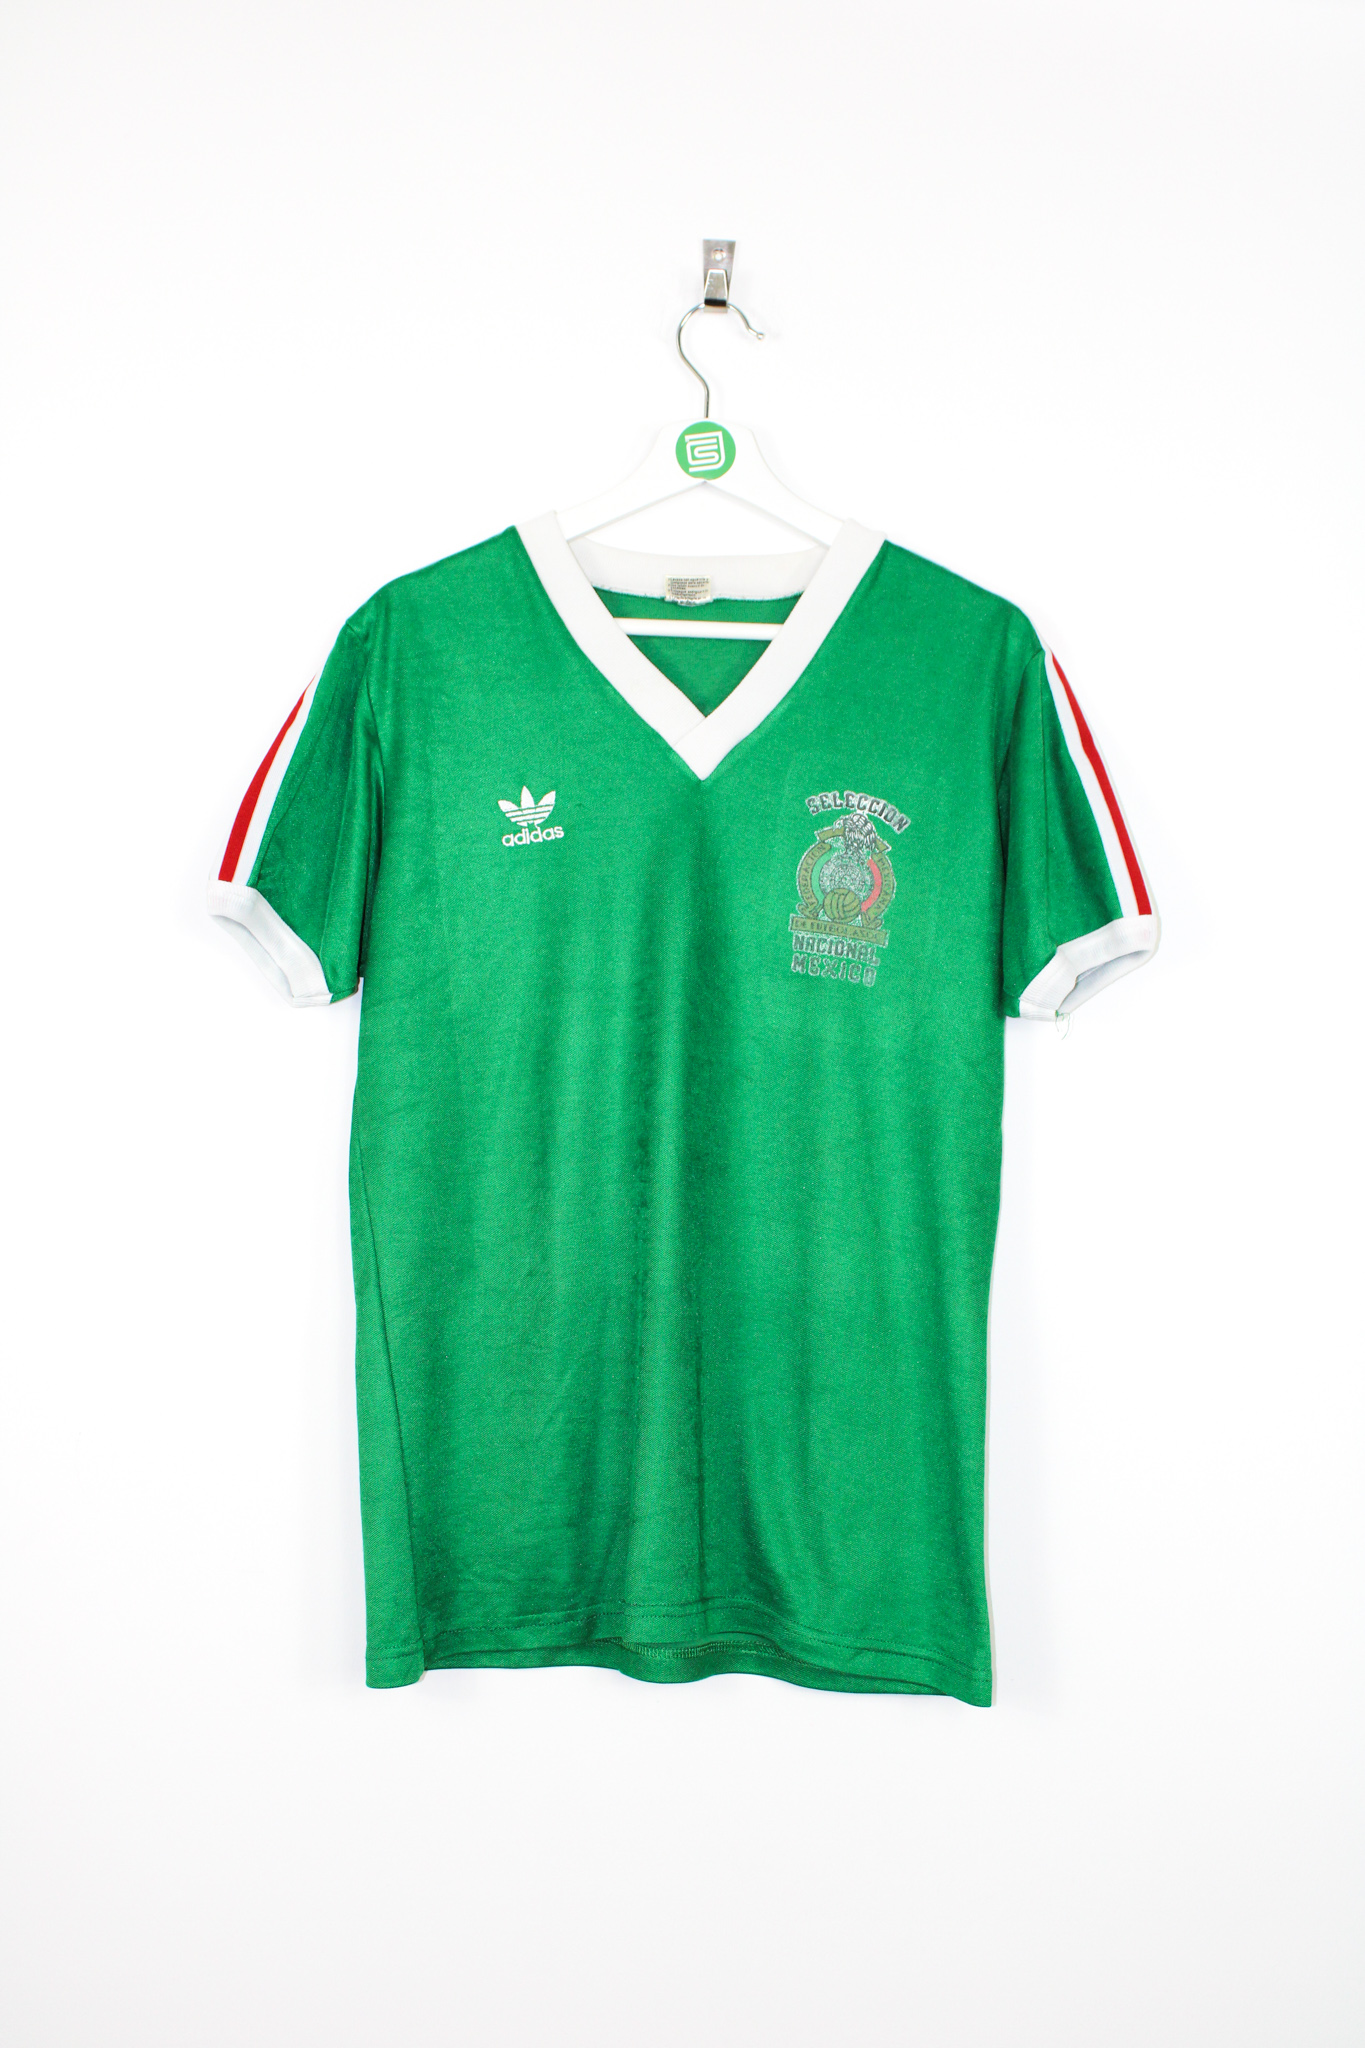 Mexico Home football shirt 1985.